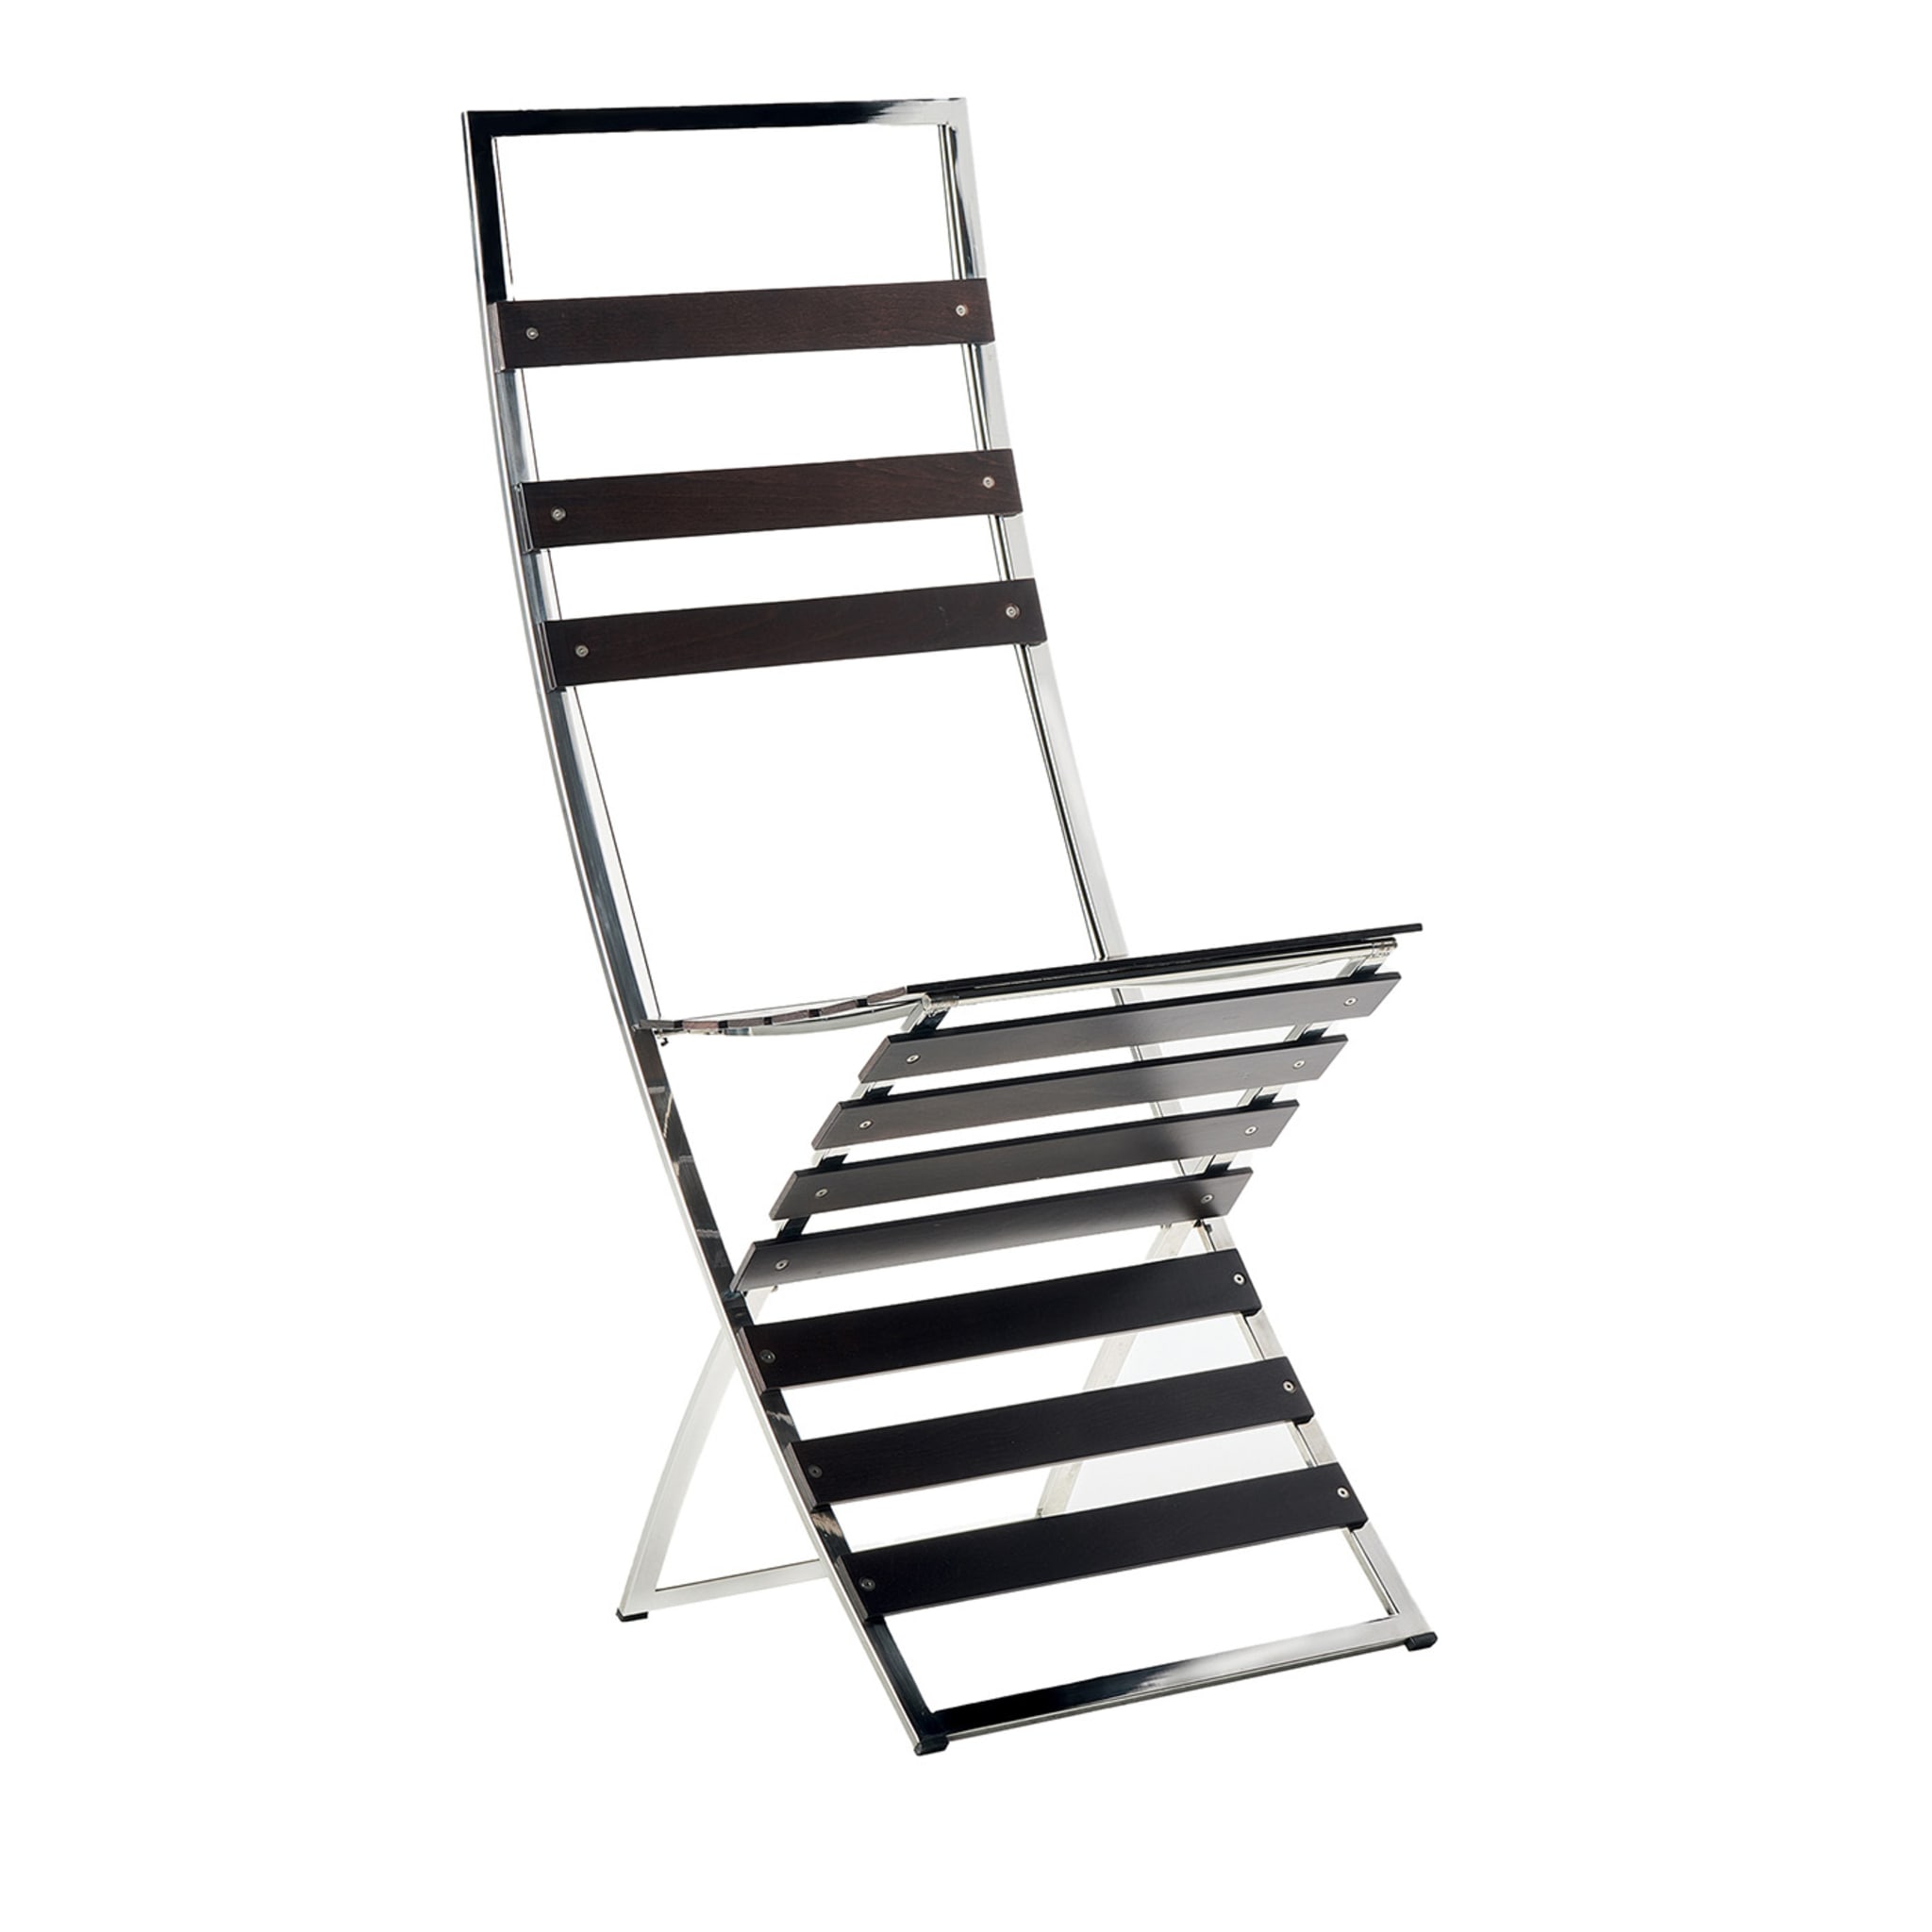 Plixy Chromed Folding Chair by Franco Poli - Main view